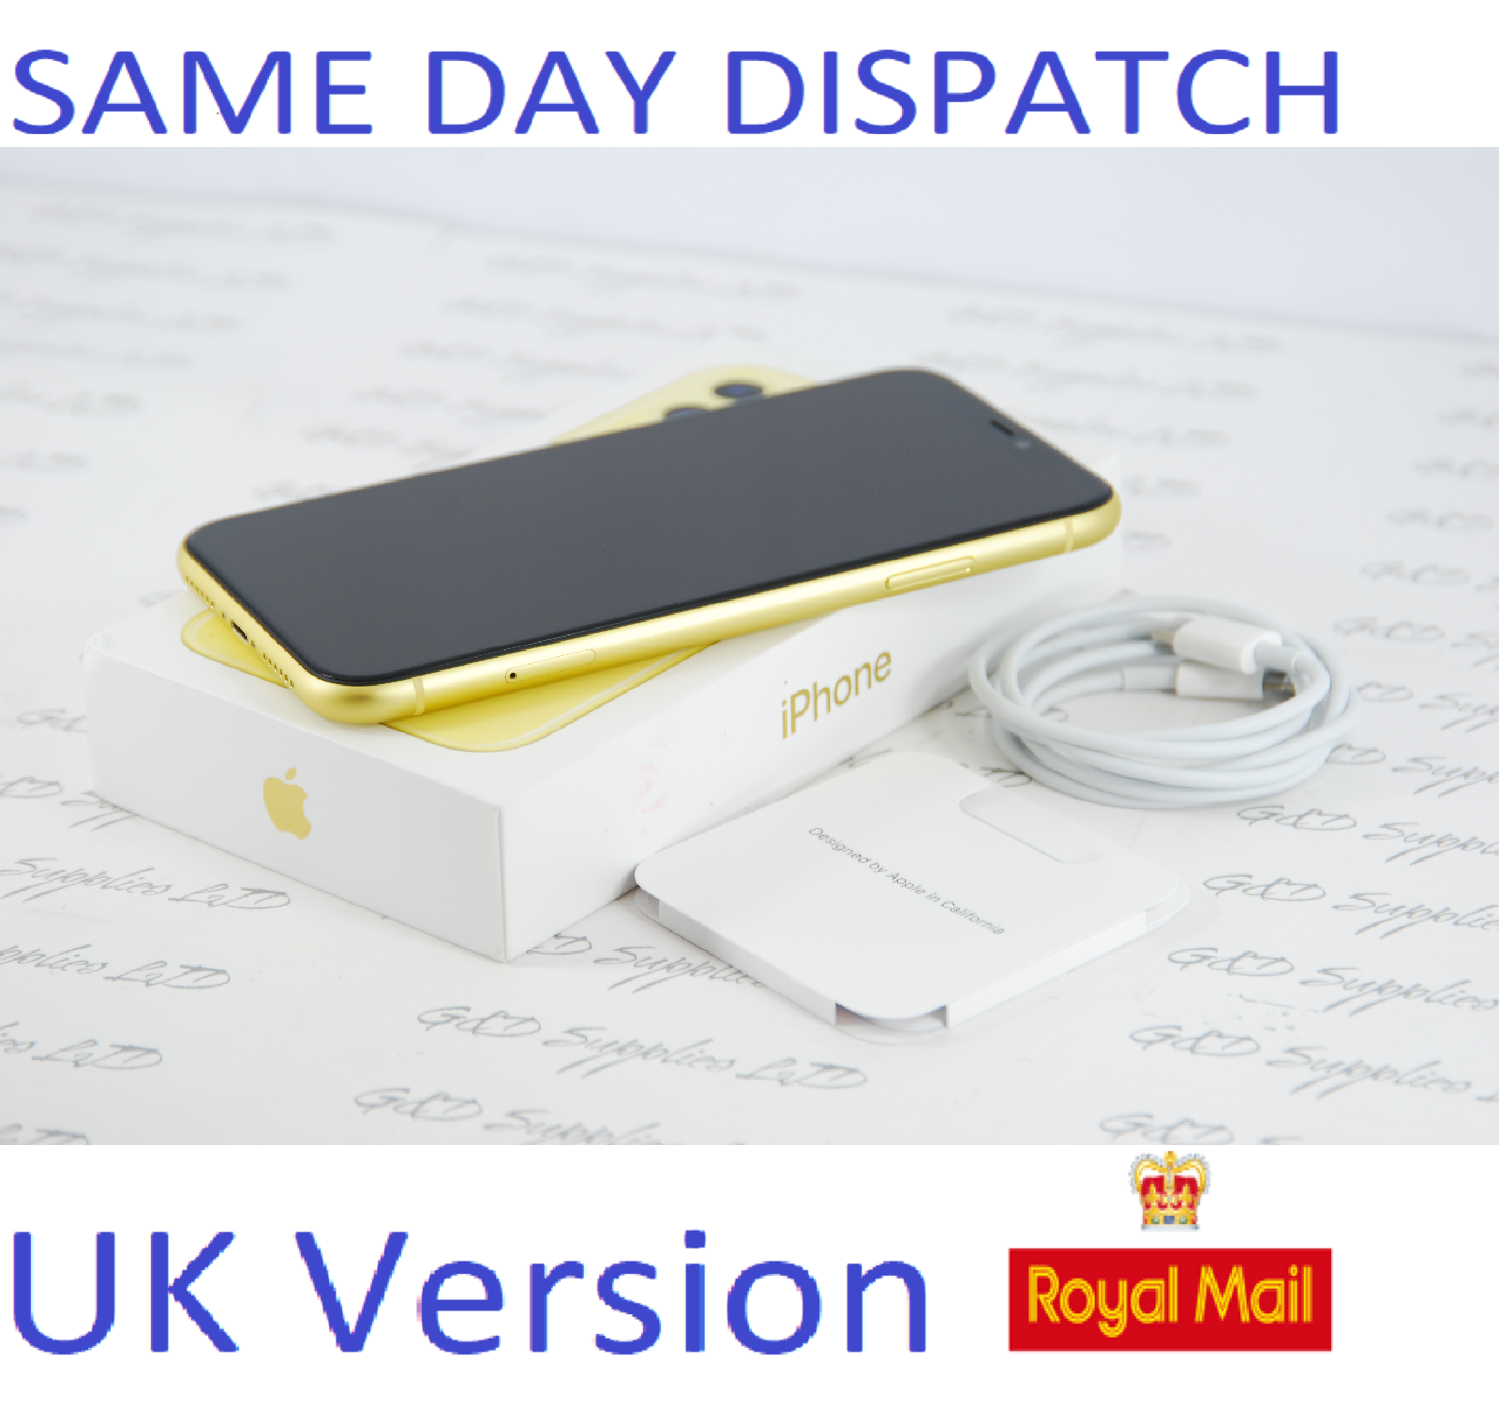 Apple iPhone 11 64GB Mobile sim-free Yellow unlocked UK Version NEW Condition #